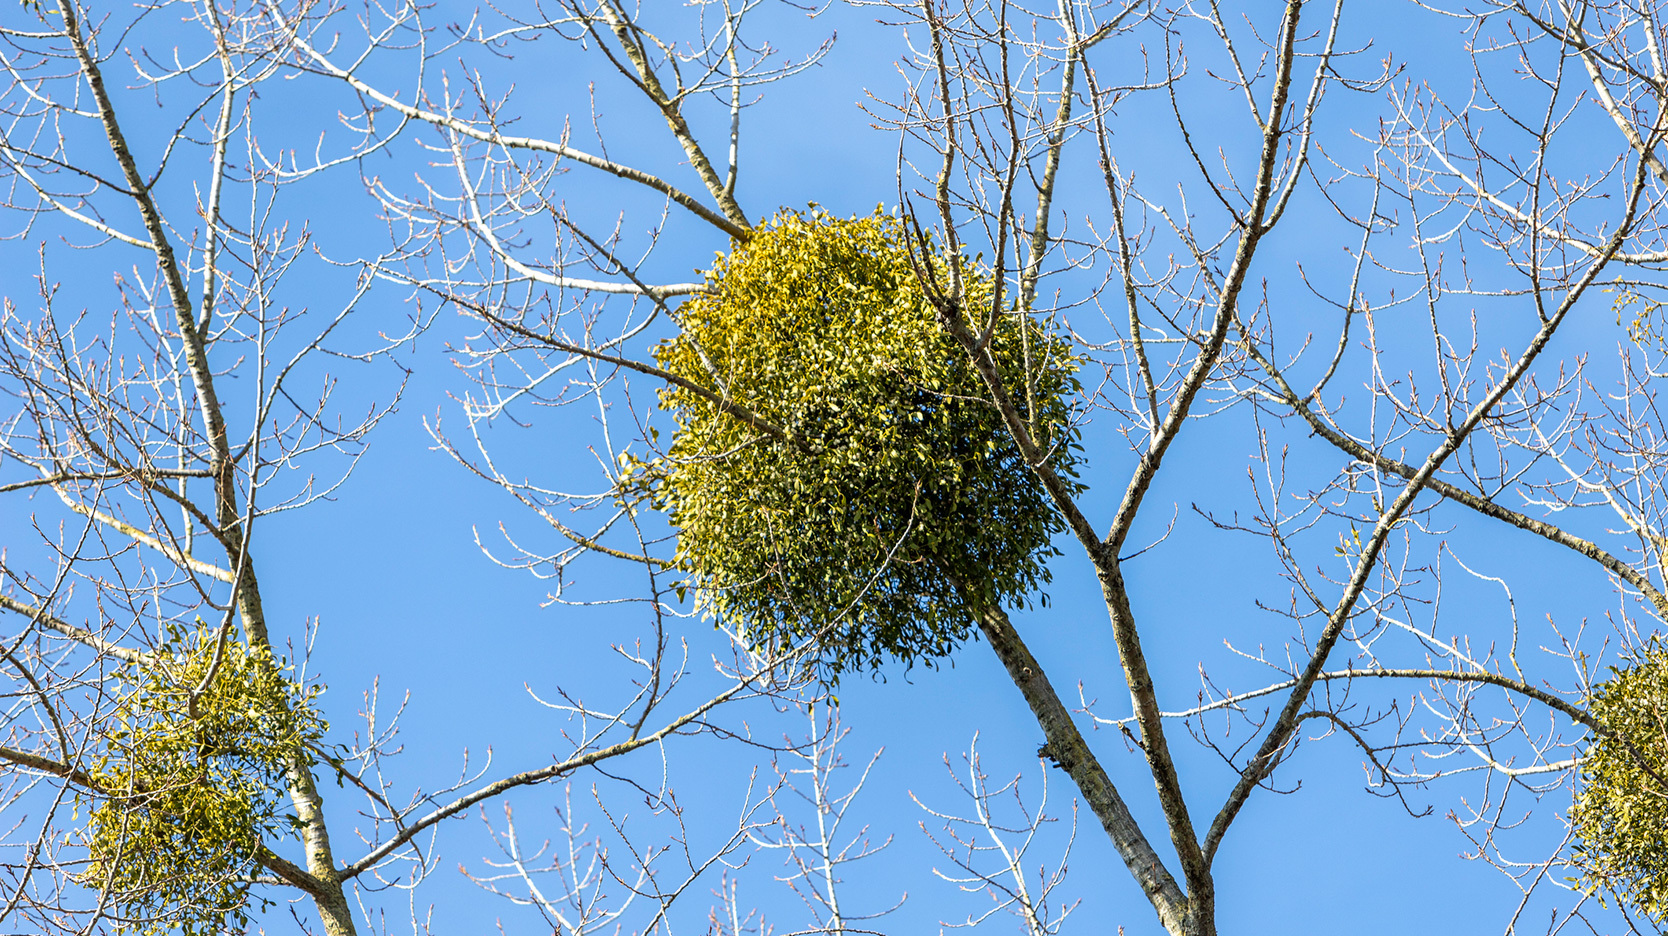 parasitism example of mistletoe on winter tree